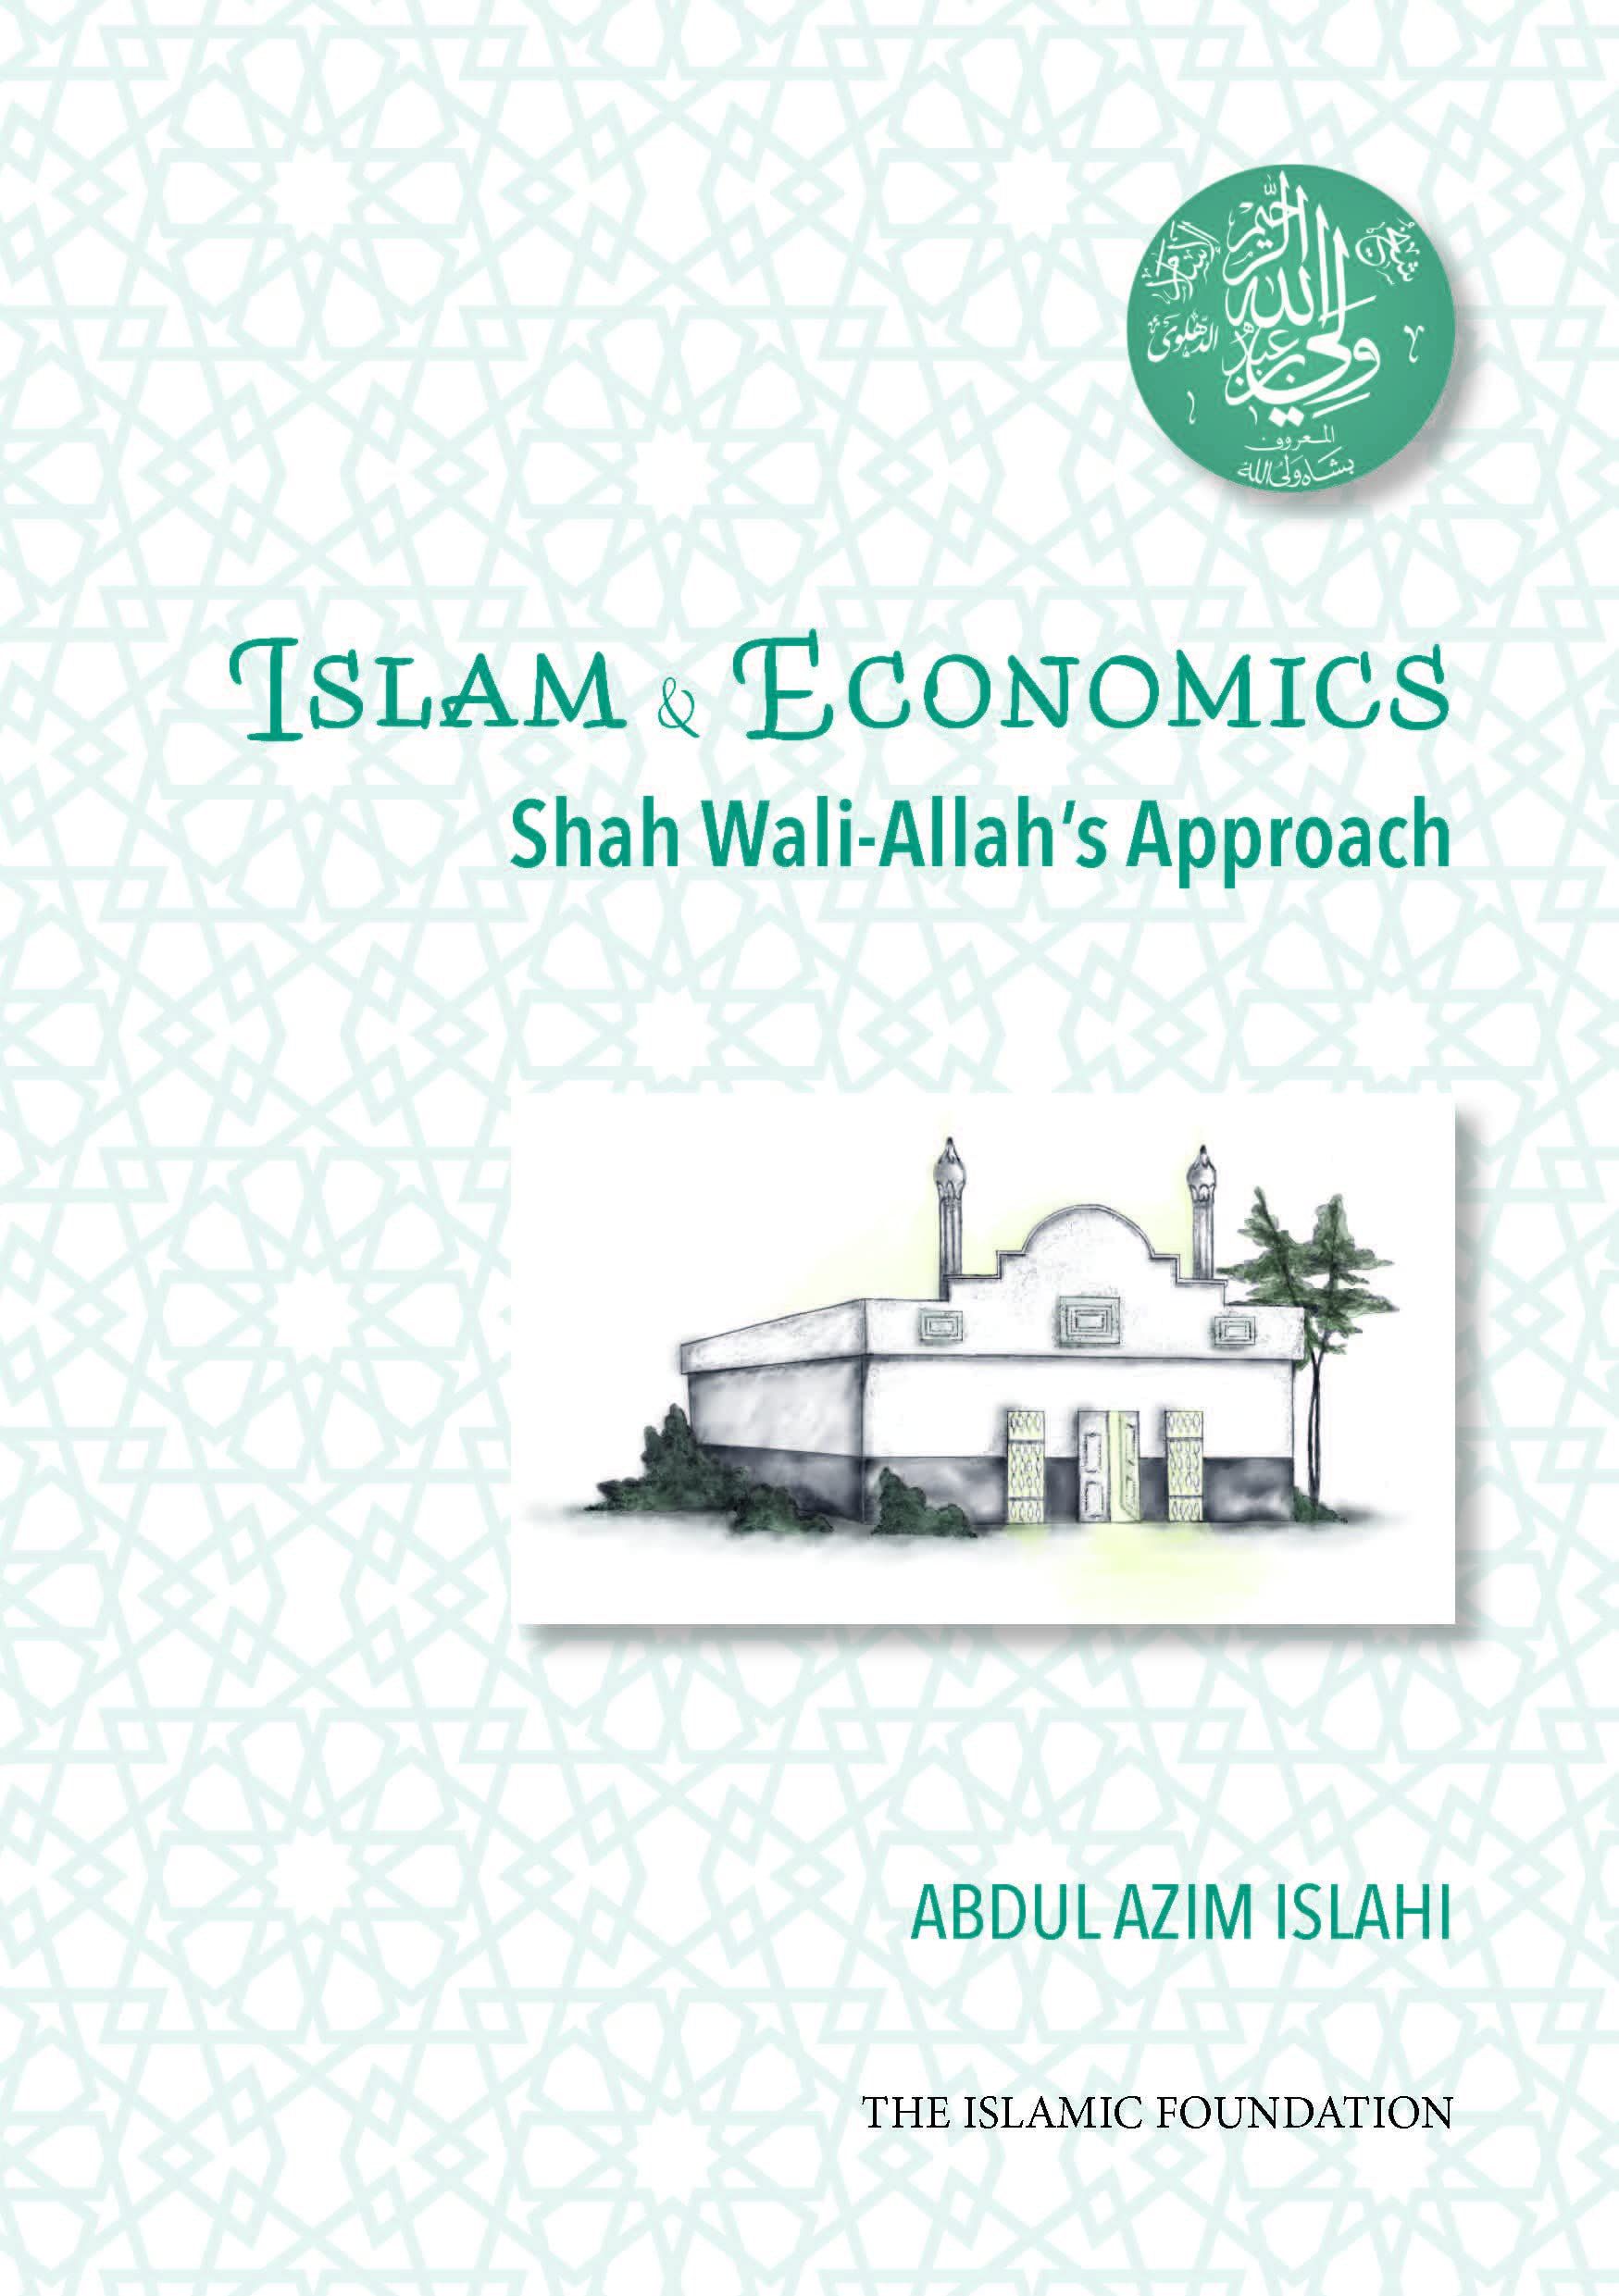 ISLAM AND ECONOMICS: SHAH WALI-ALLAH'S APPROACH